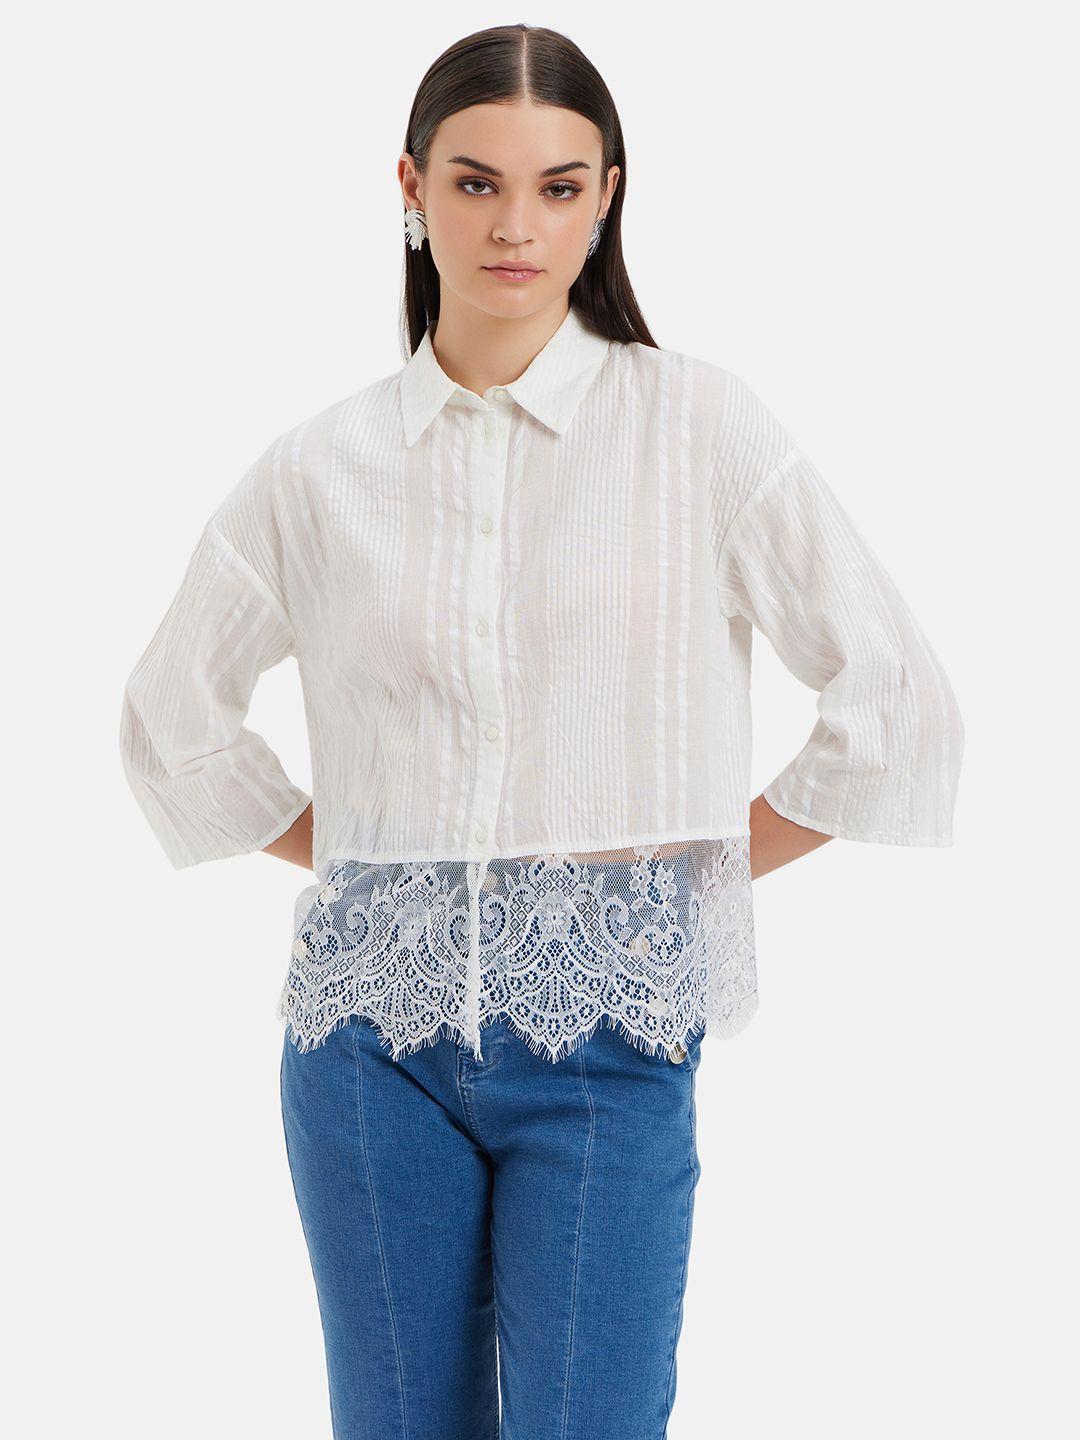 kazo spread collar claire textured cotton standard boxy opaque striped casual shirt